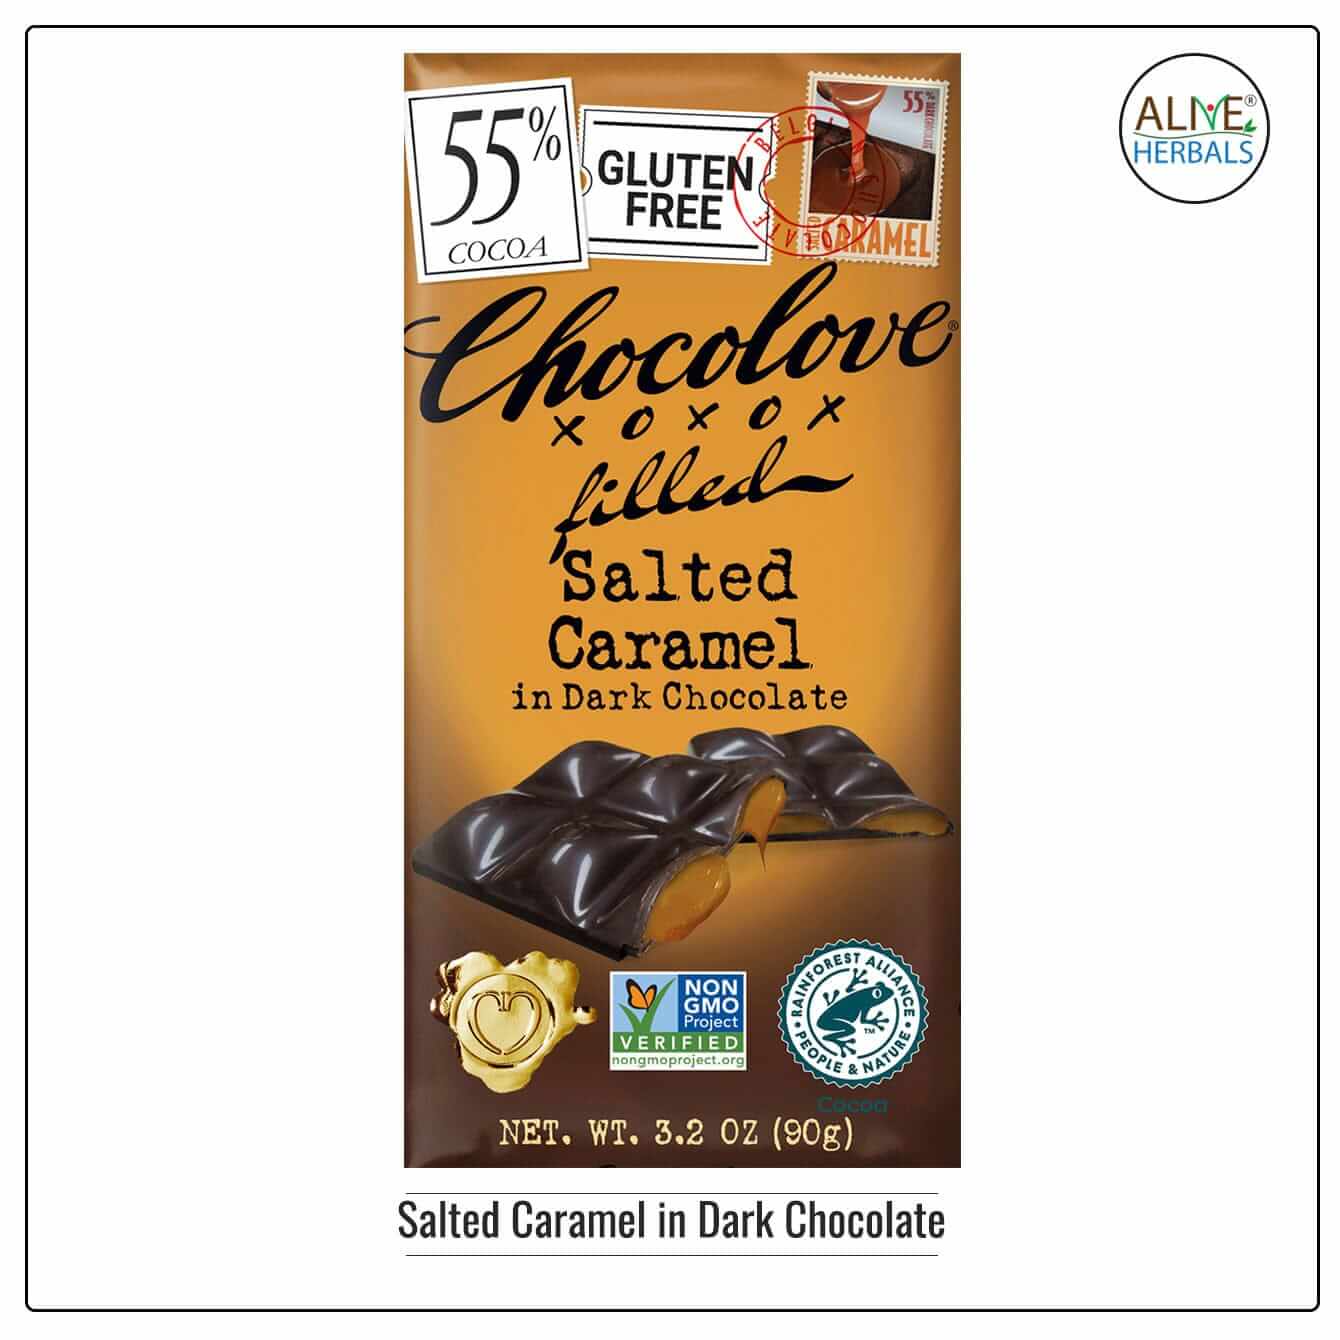 Salted Caramel in Dark Chocolate - Buy at Natural Food Store | Alive Herbals.